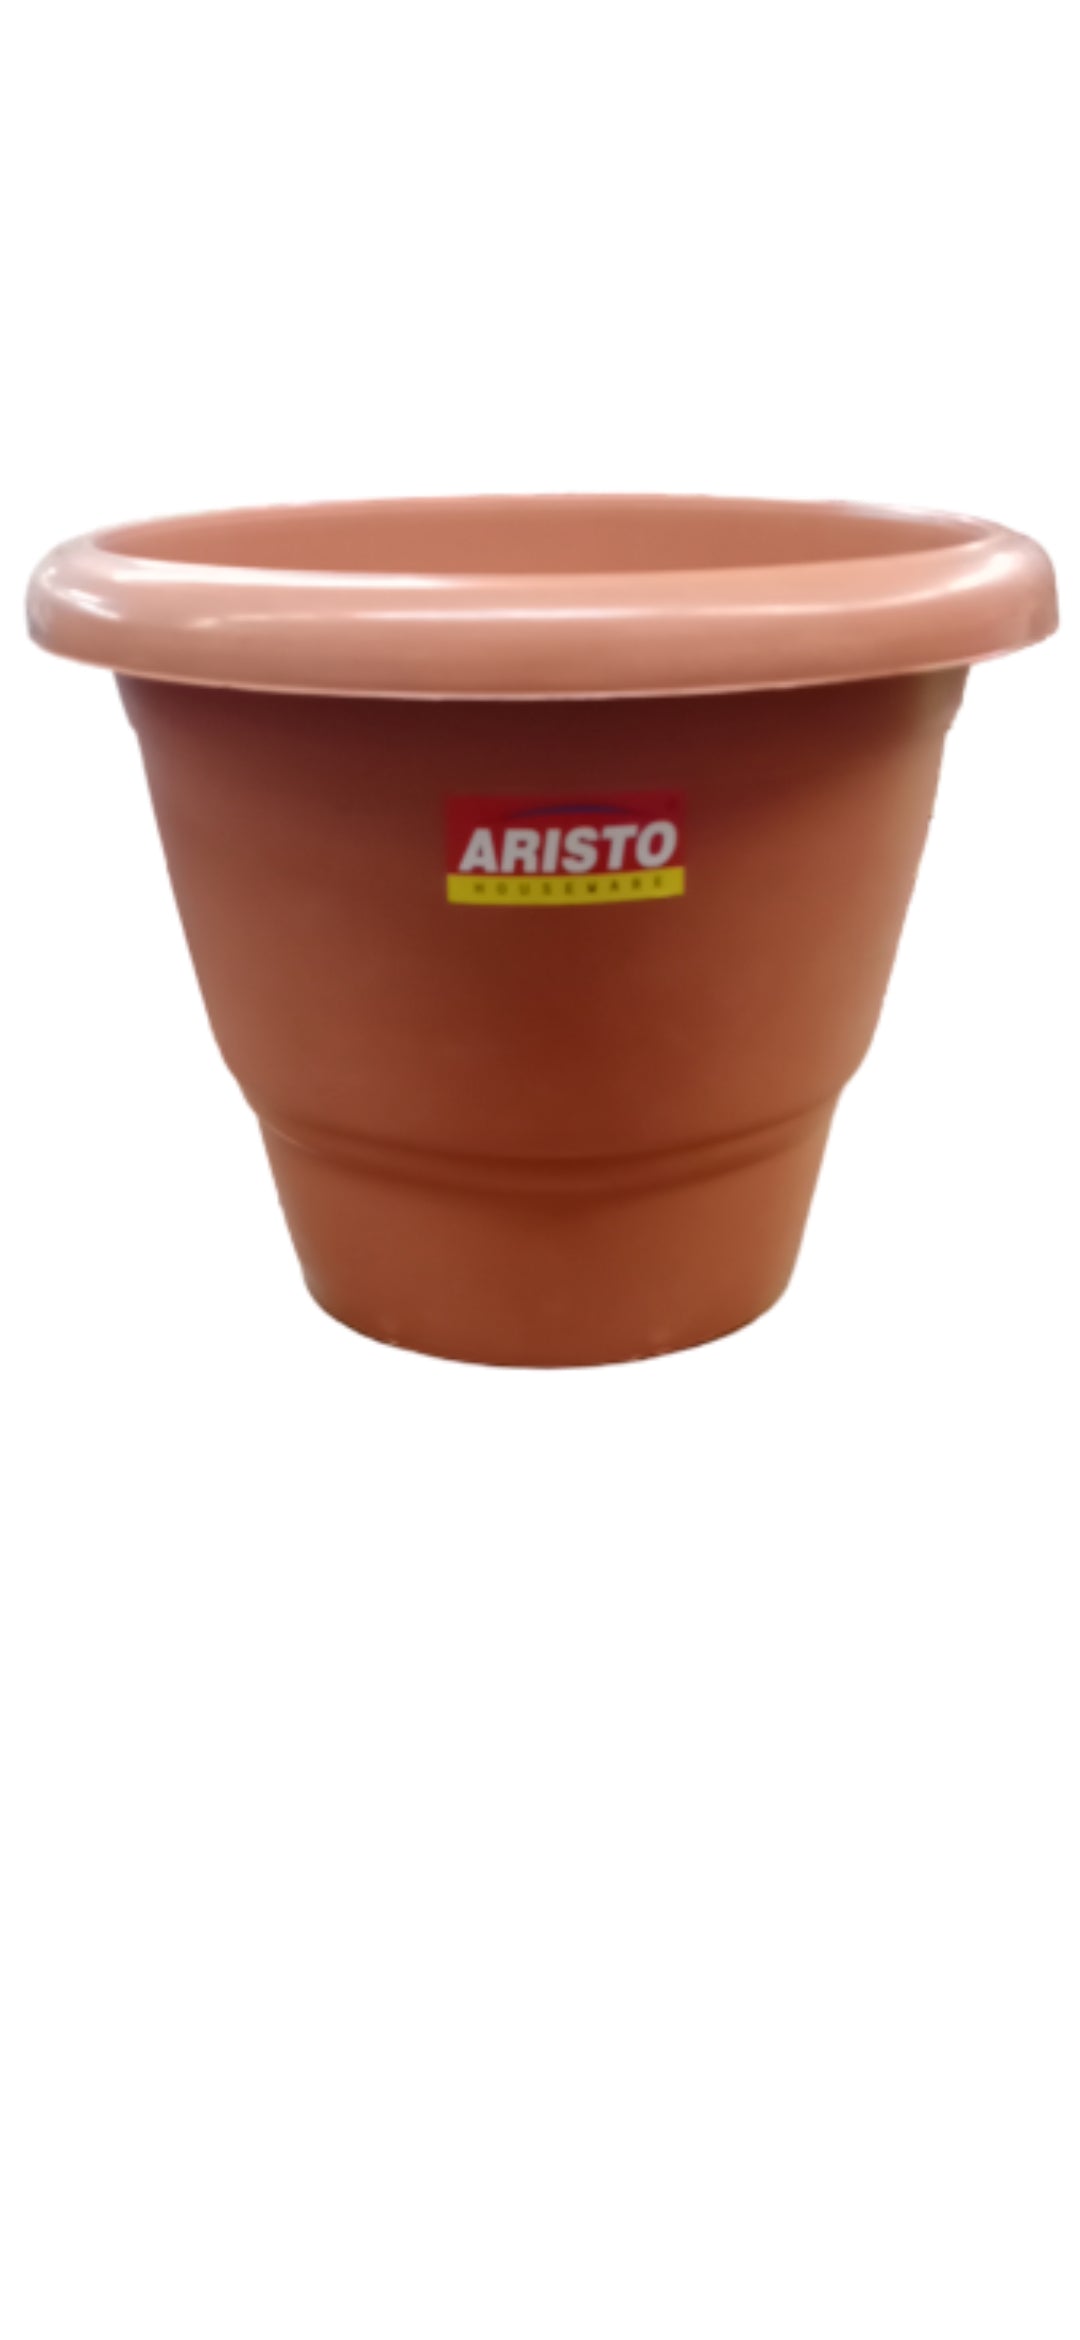 Aristo Round Planters. - No.14